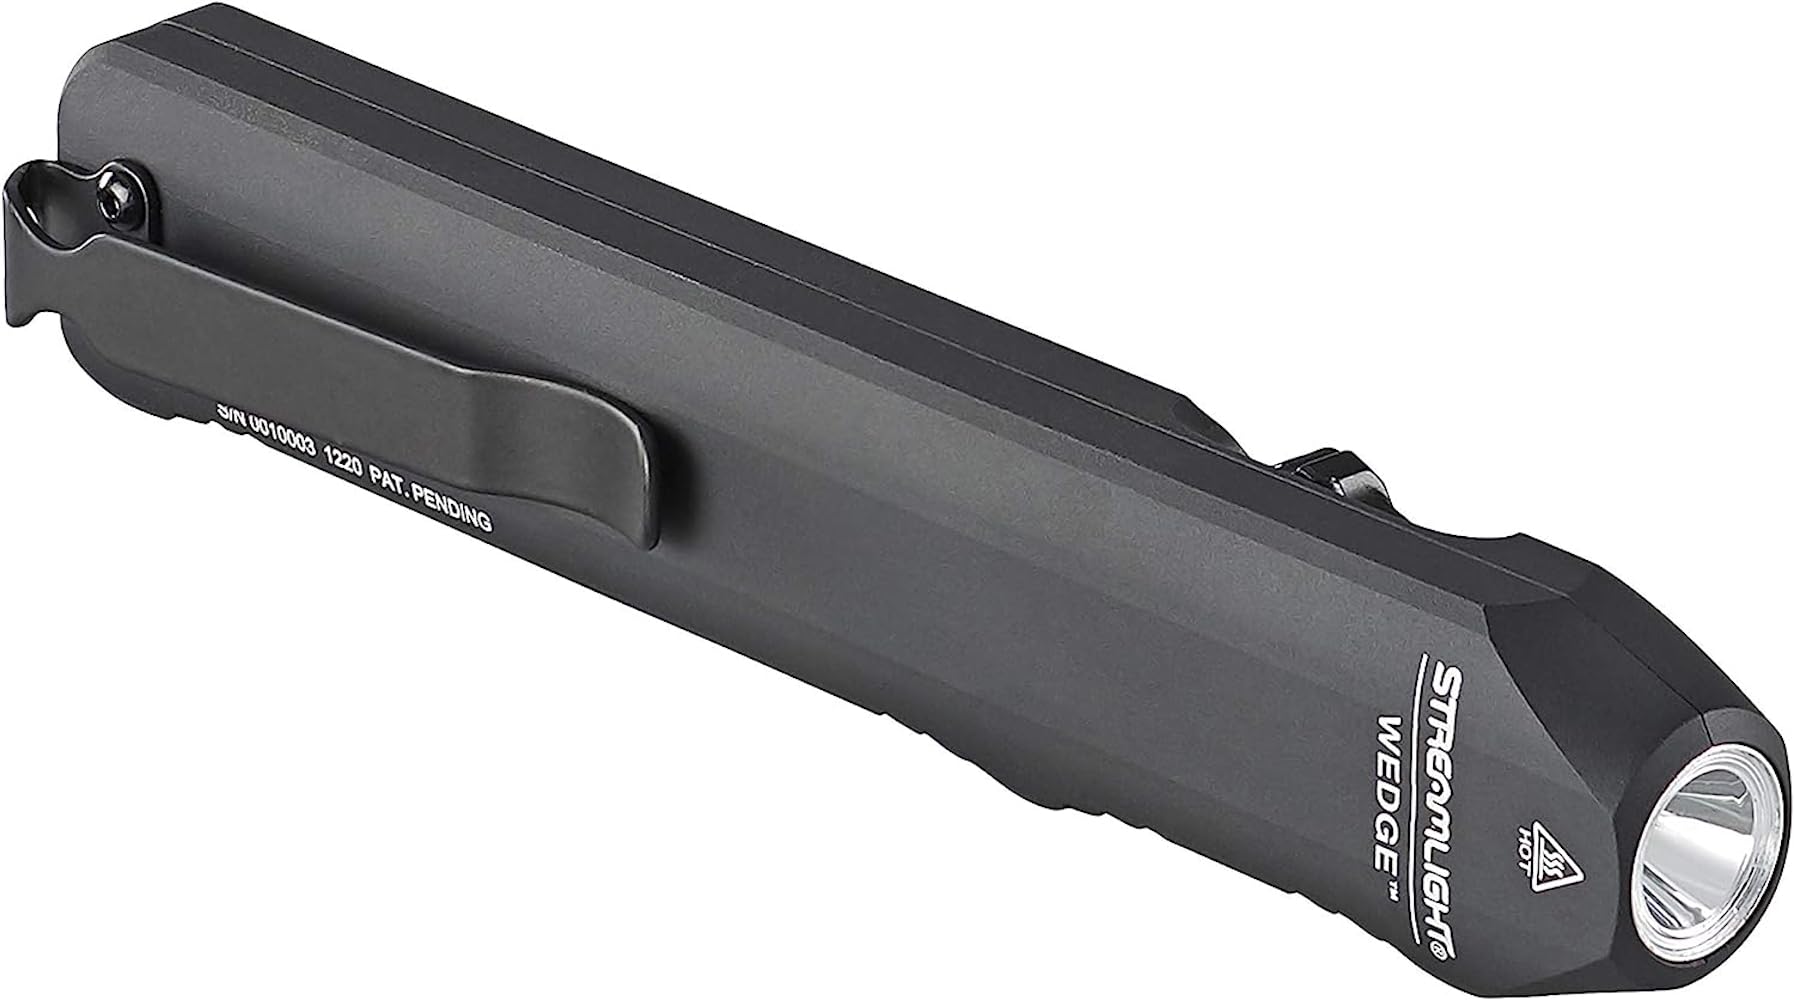 Streamlight 88810 Wedge 300-Lumen Slim Everyday Carry Flashlight, Includes USB-C Cord, Lanyard, Box, Black